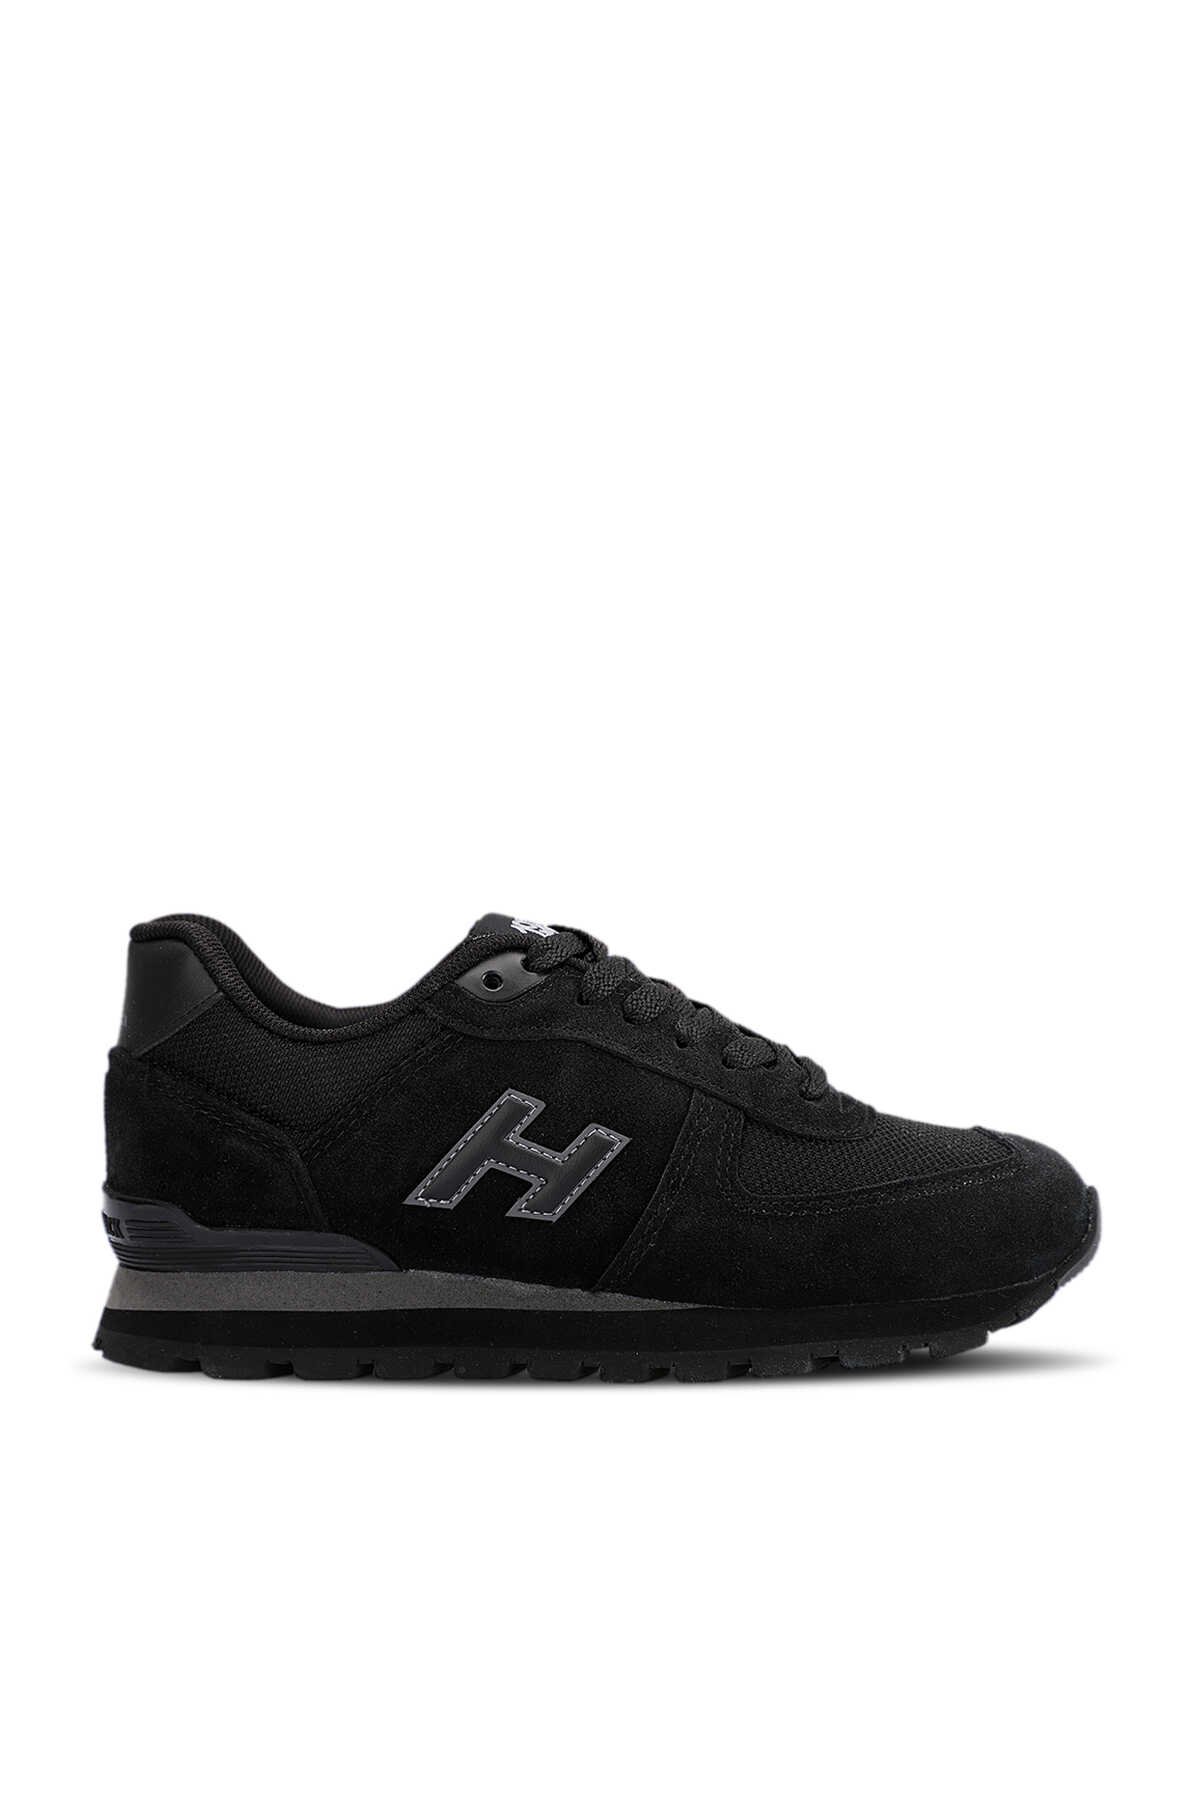 Hammer Jack PERU Sneaker Kadın Ayakkabı Siyah / Füme